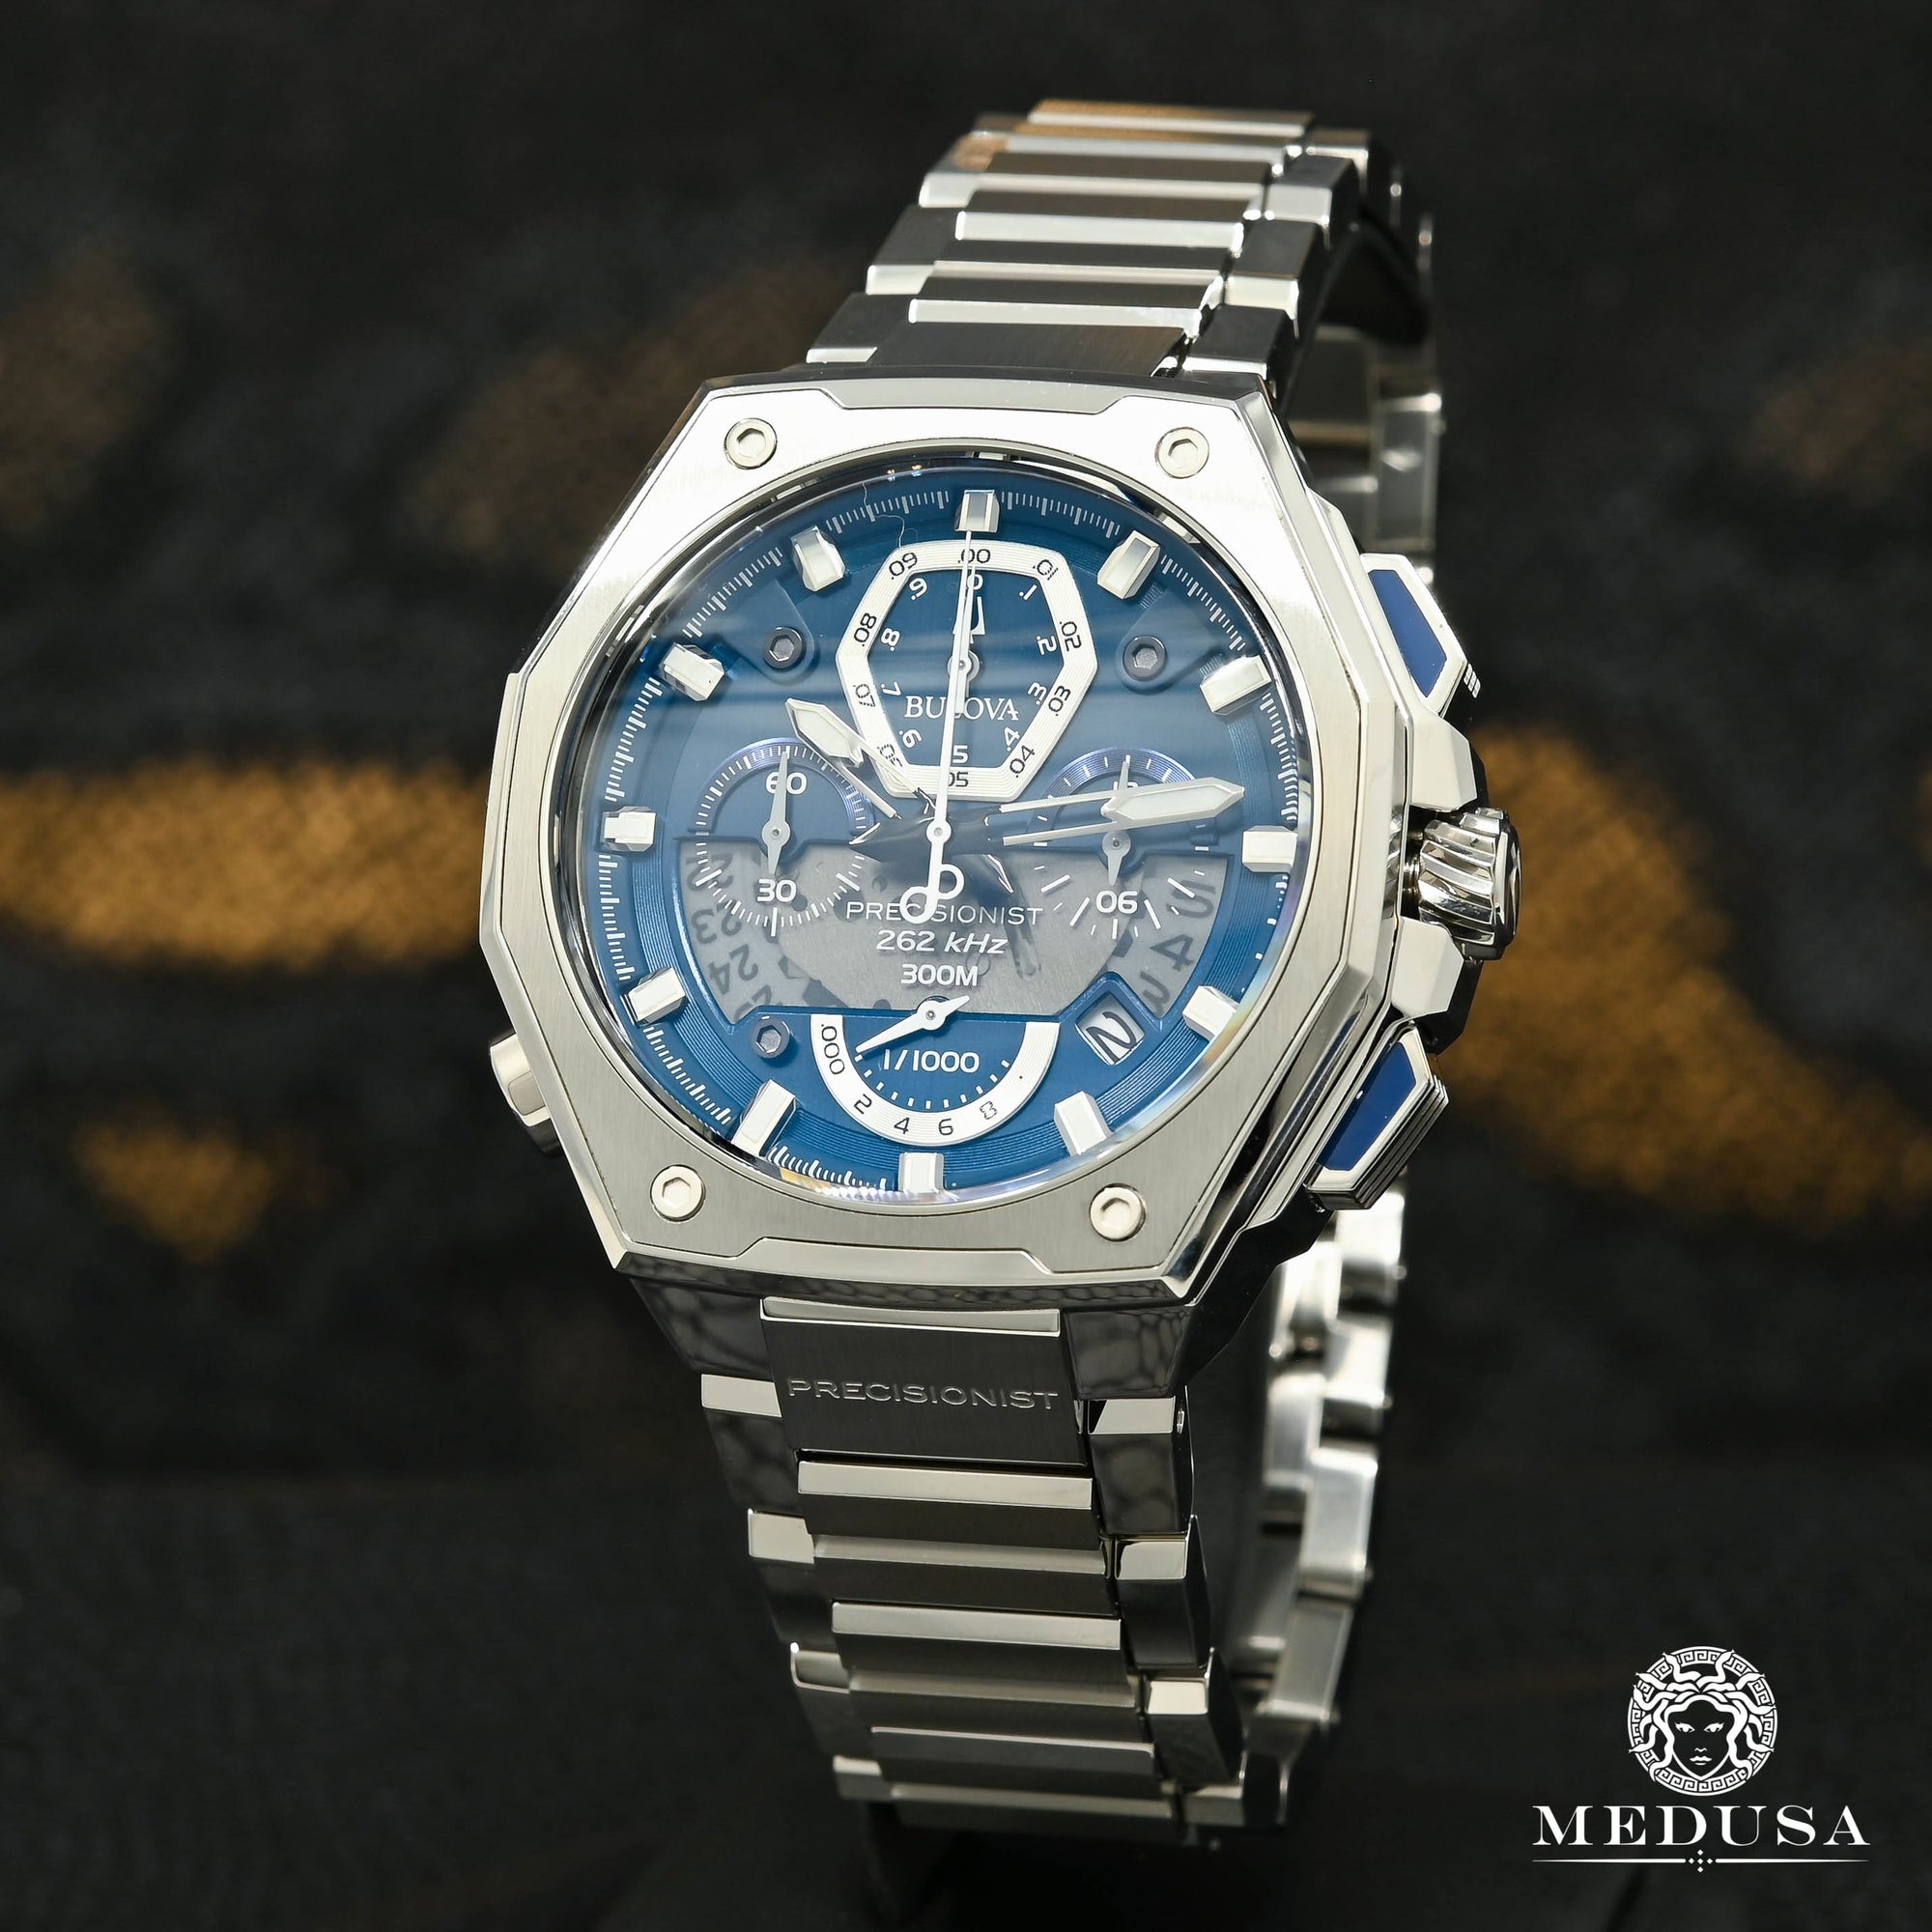 Bulova Watch | Bulova Precisionist Men's Watch - 96B349 Stainless